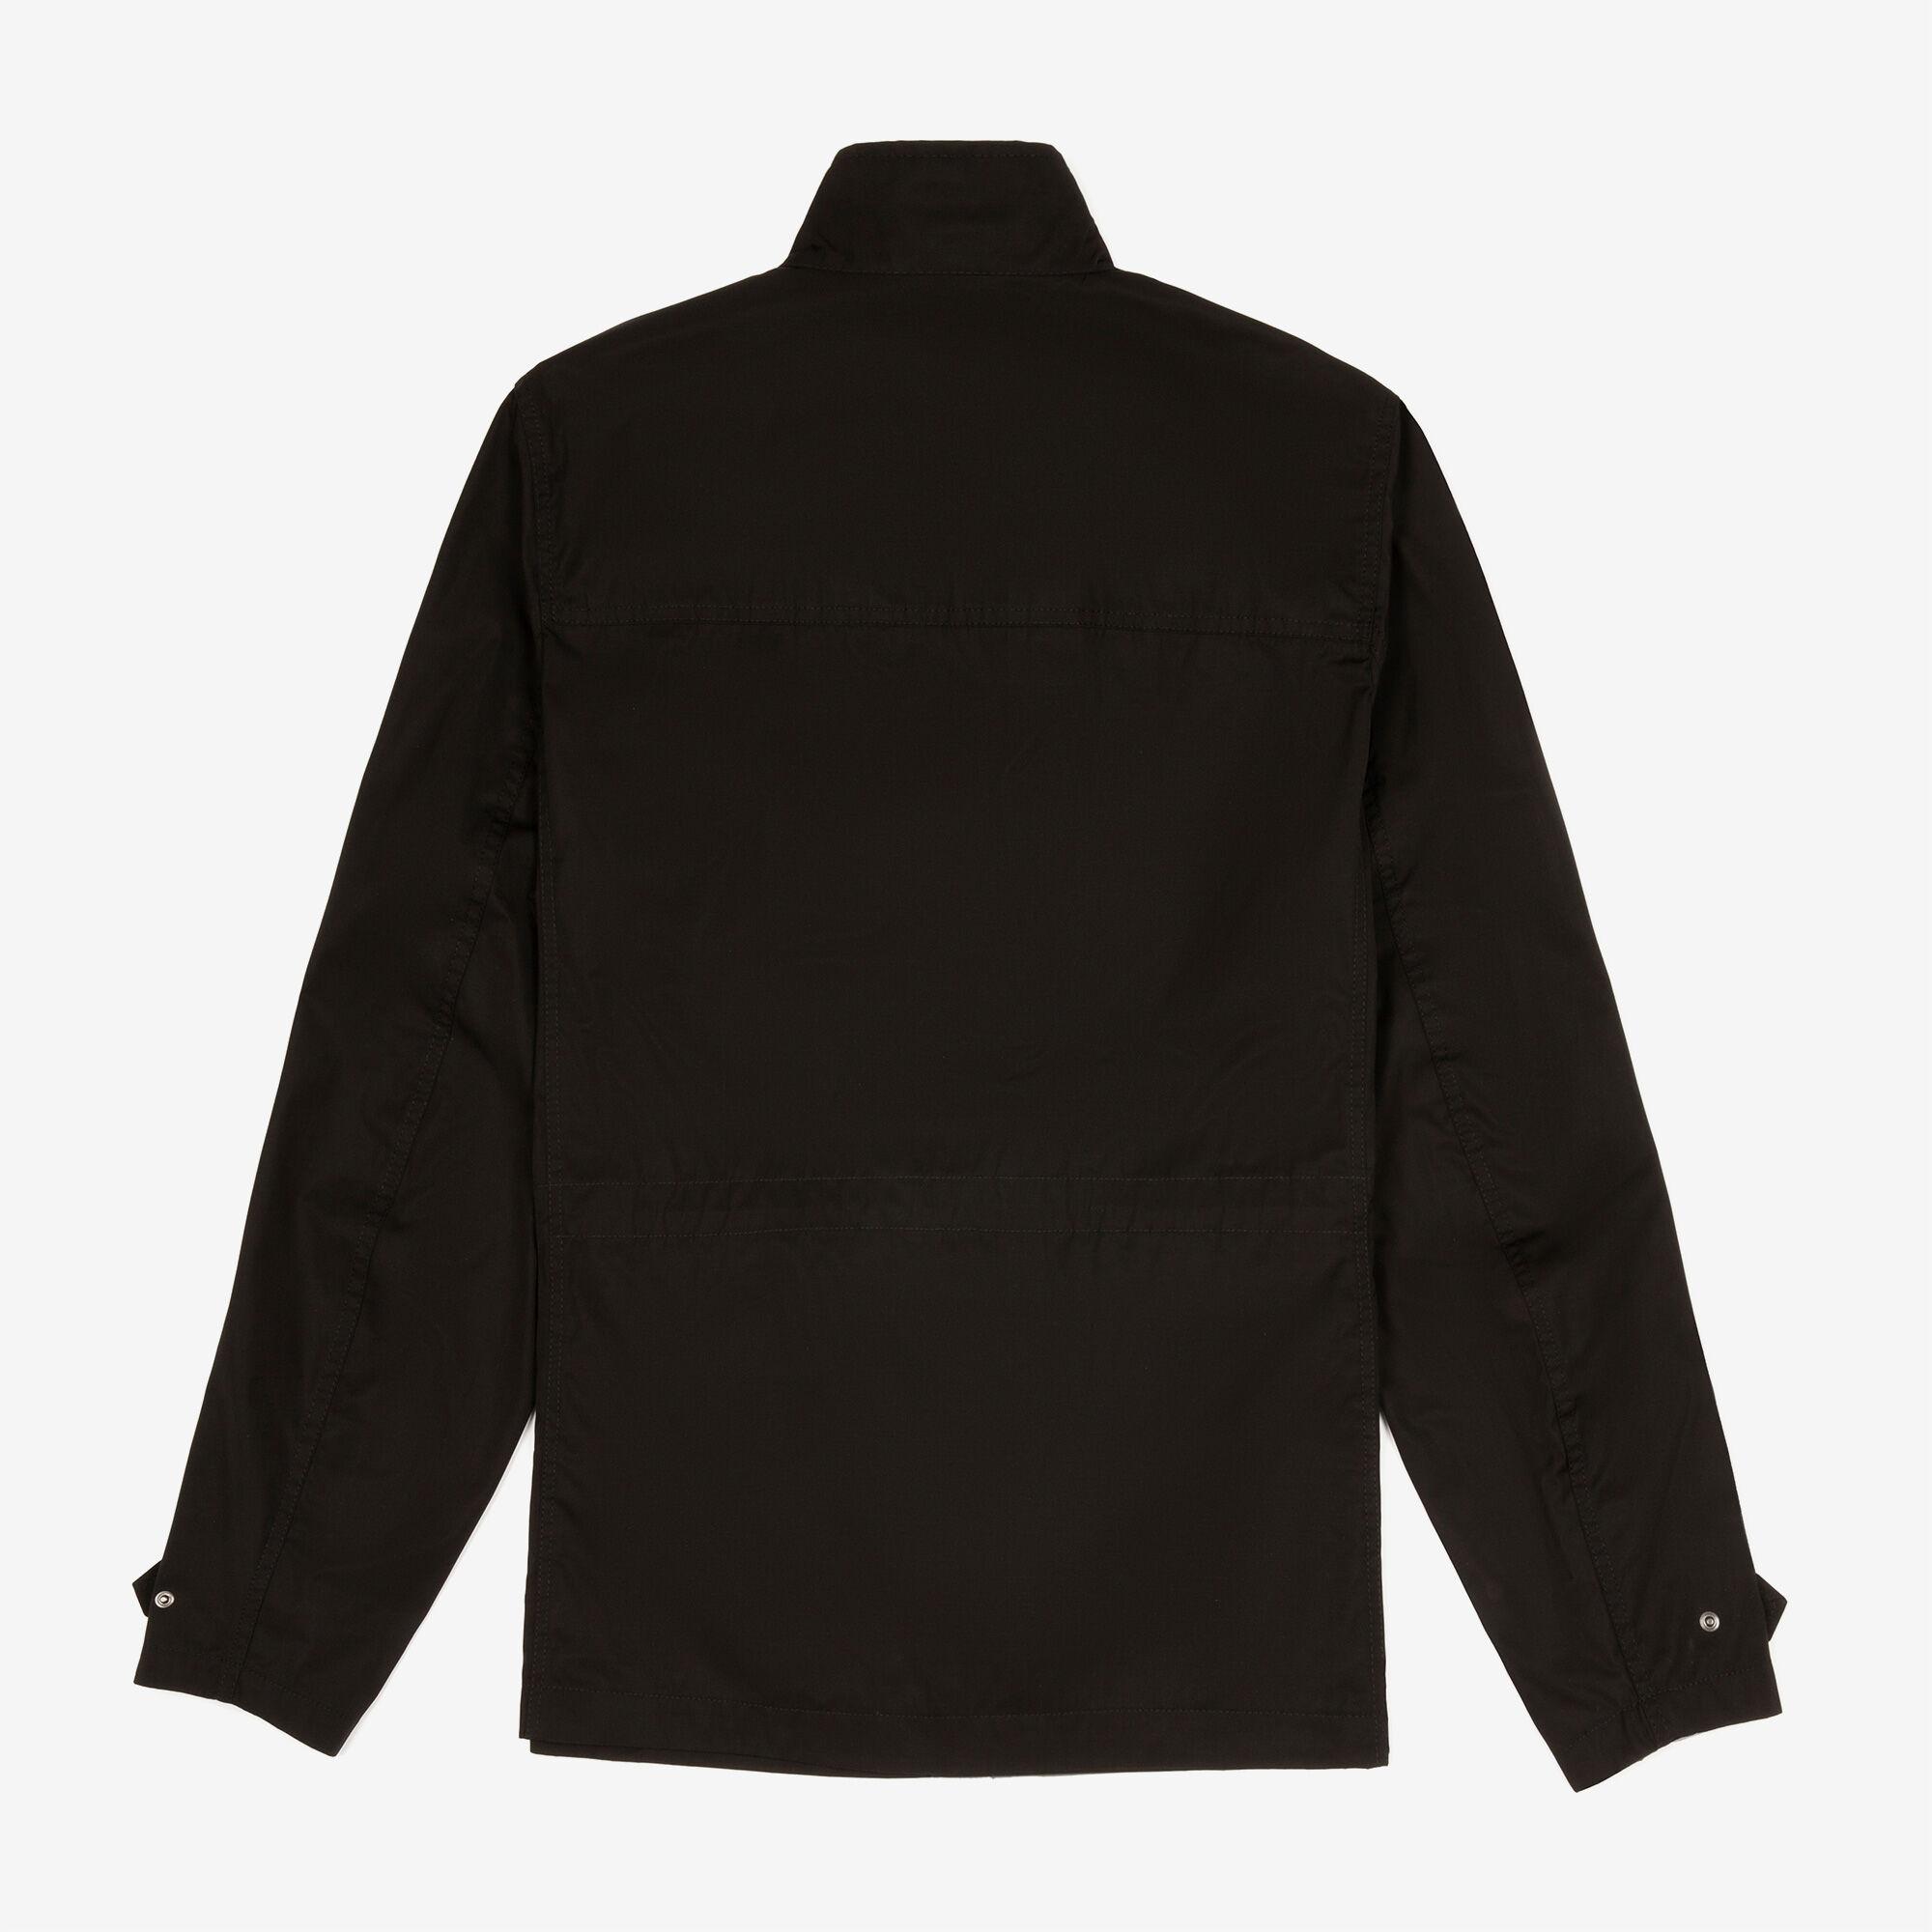 Bally Cotton Canvas Field Jacket in Black for Men - Lyst